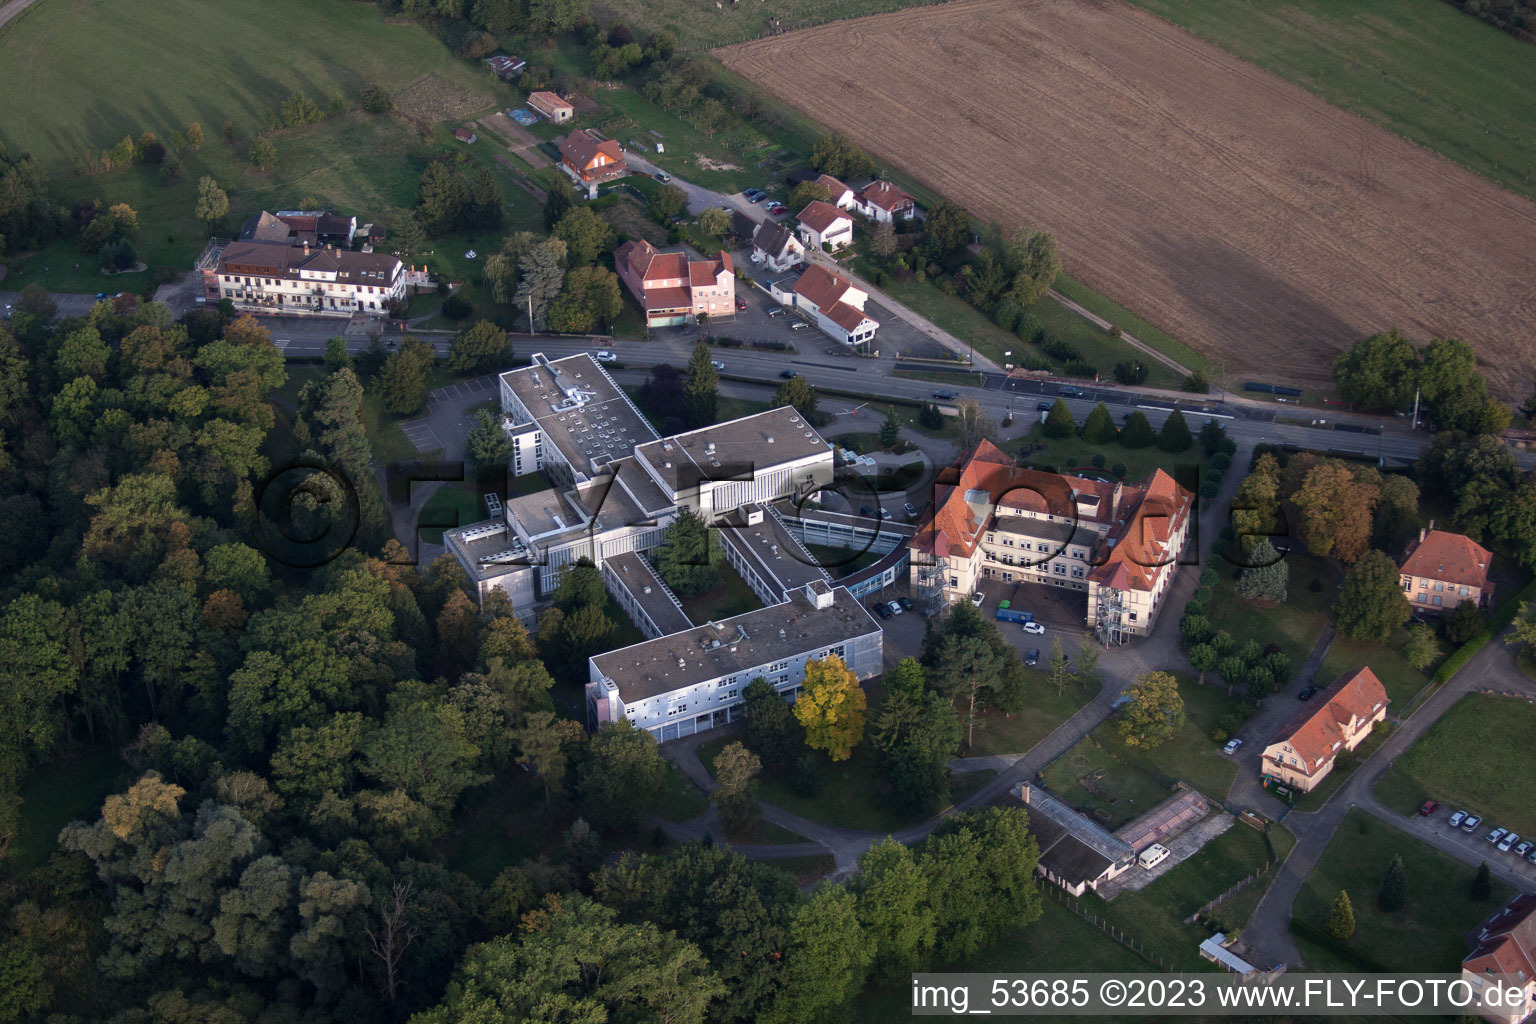 Morsbronn-les-Bains im Bundesland Bas-Rhin, Frankreich aus der Luft betrachtet